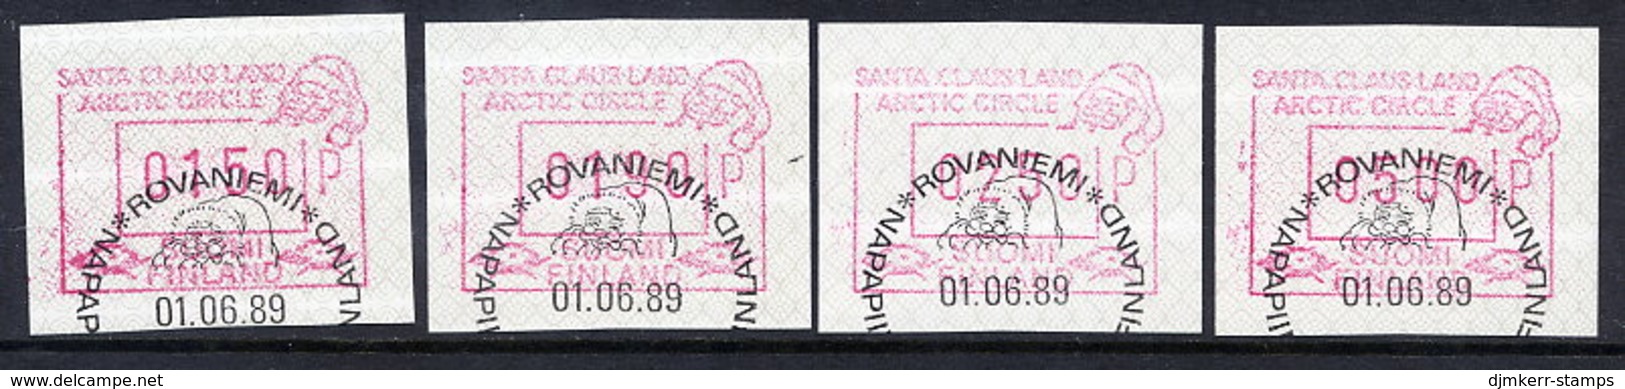 FINLAND 1989 Santa Claus Land , 4 Different Values Used .Michel 6 - Automaatzegels [ATM]